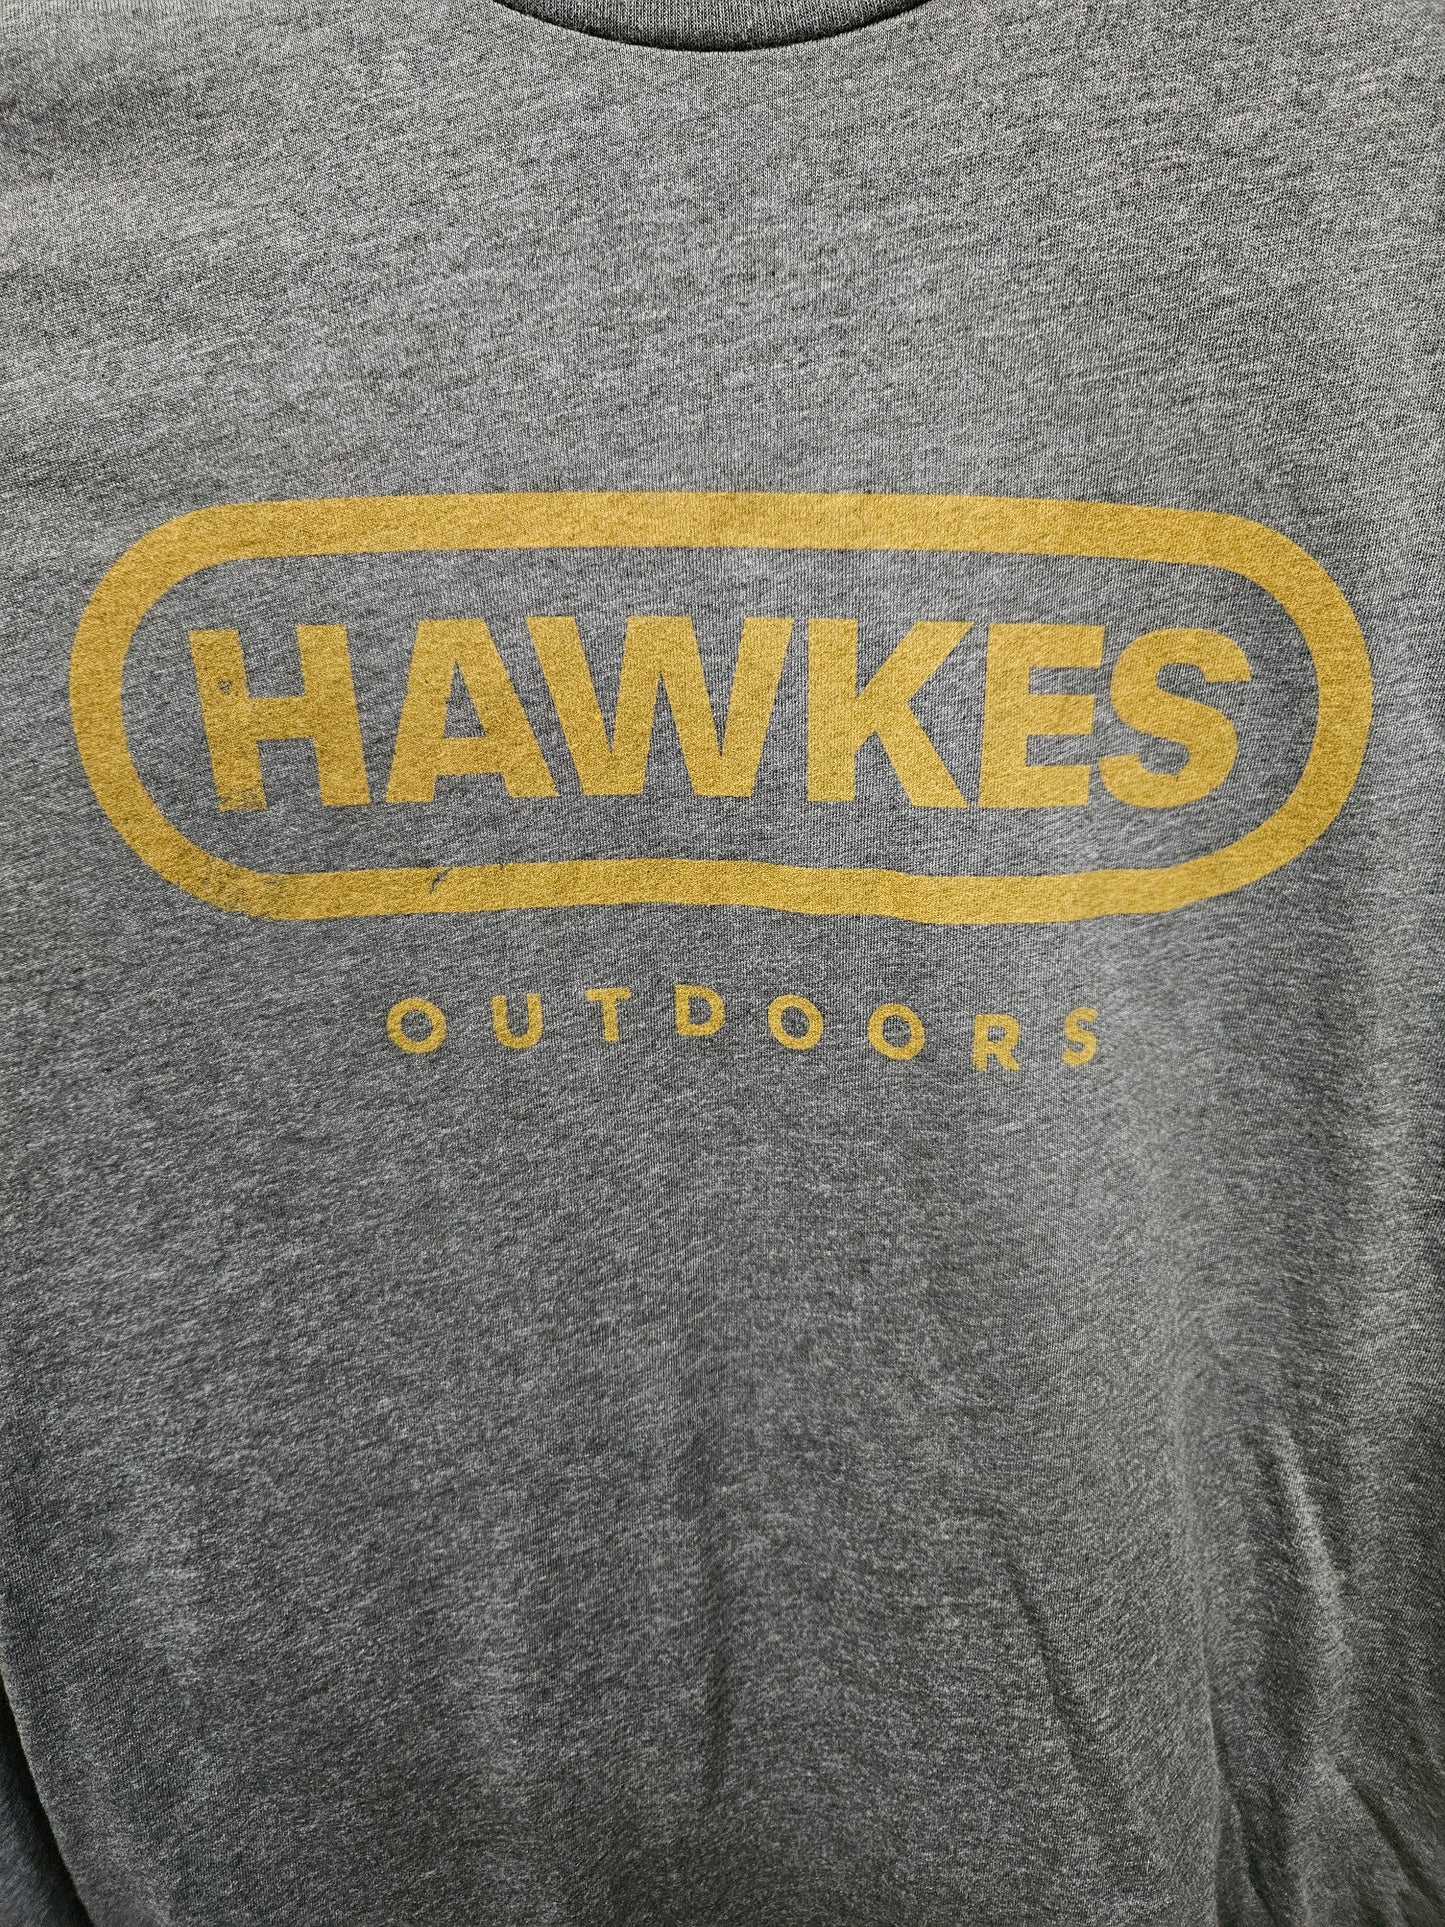 Hawkes T-Shirt - Vintage Logo